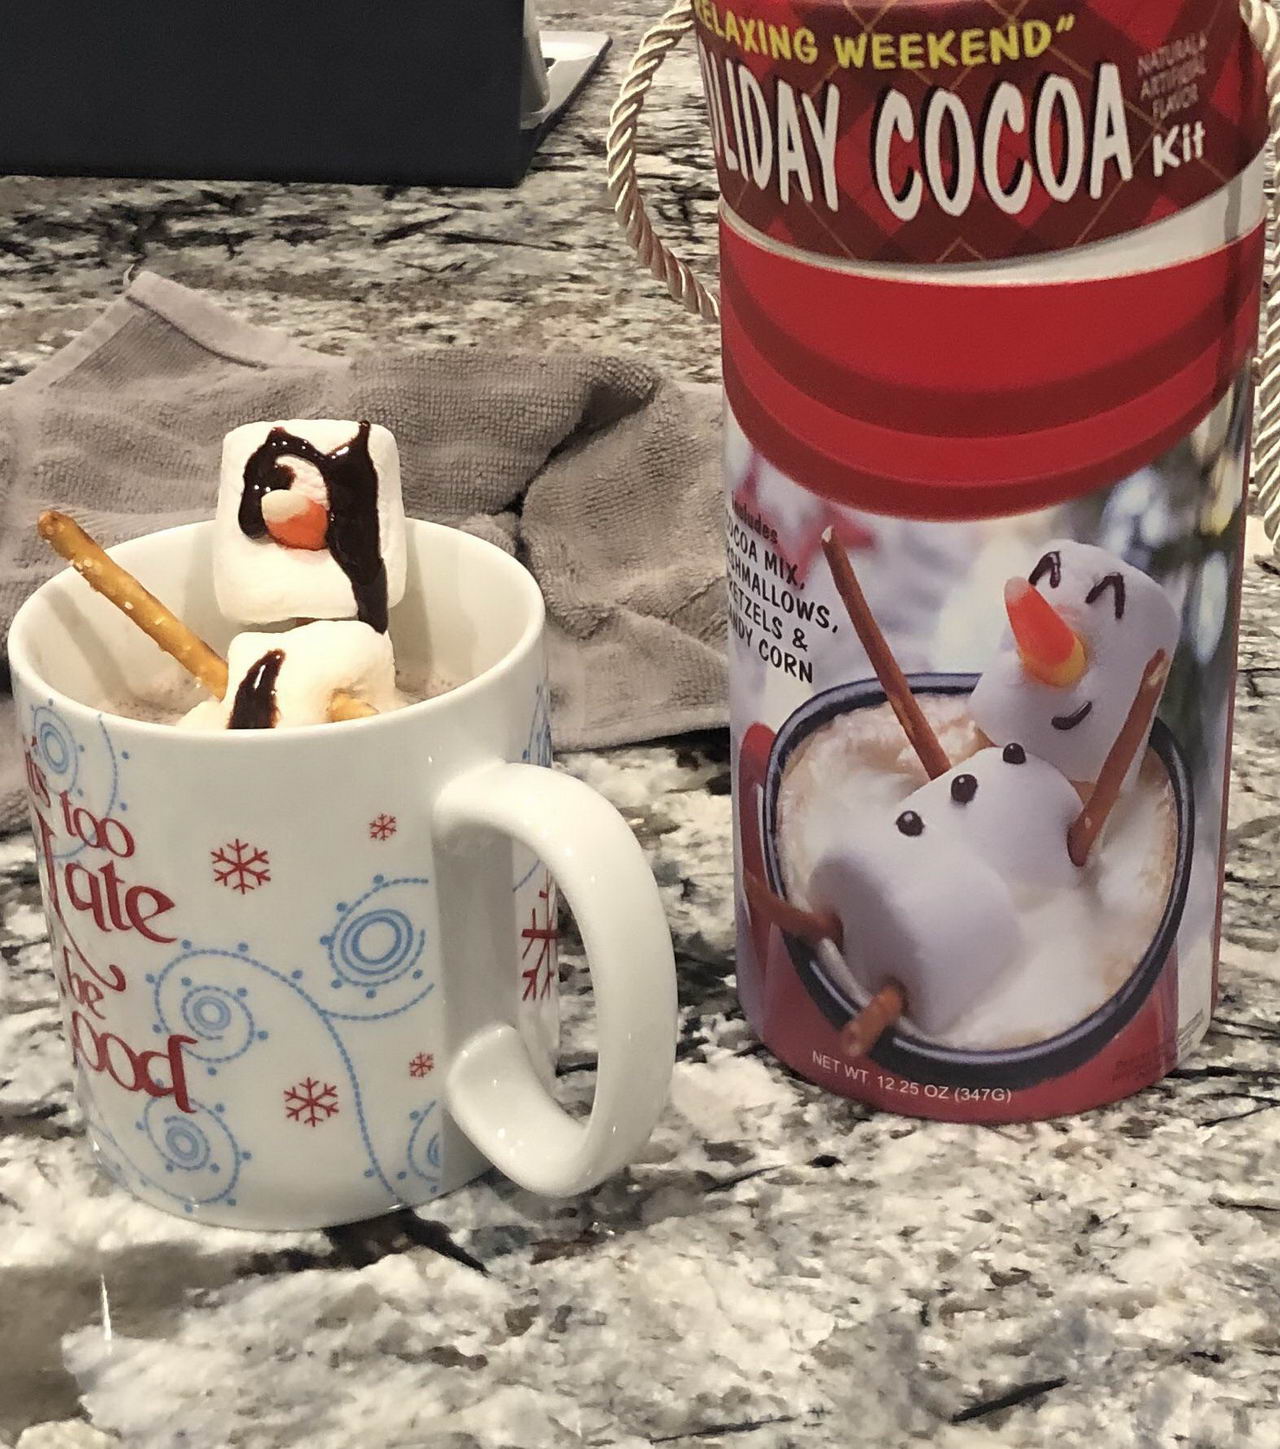 snowman - Laxing Weekend Day Cocoa K Kit Dam Wallows Oy Corn Et Wt 12.25 Oz 3476